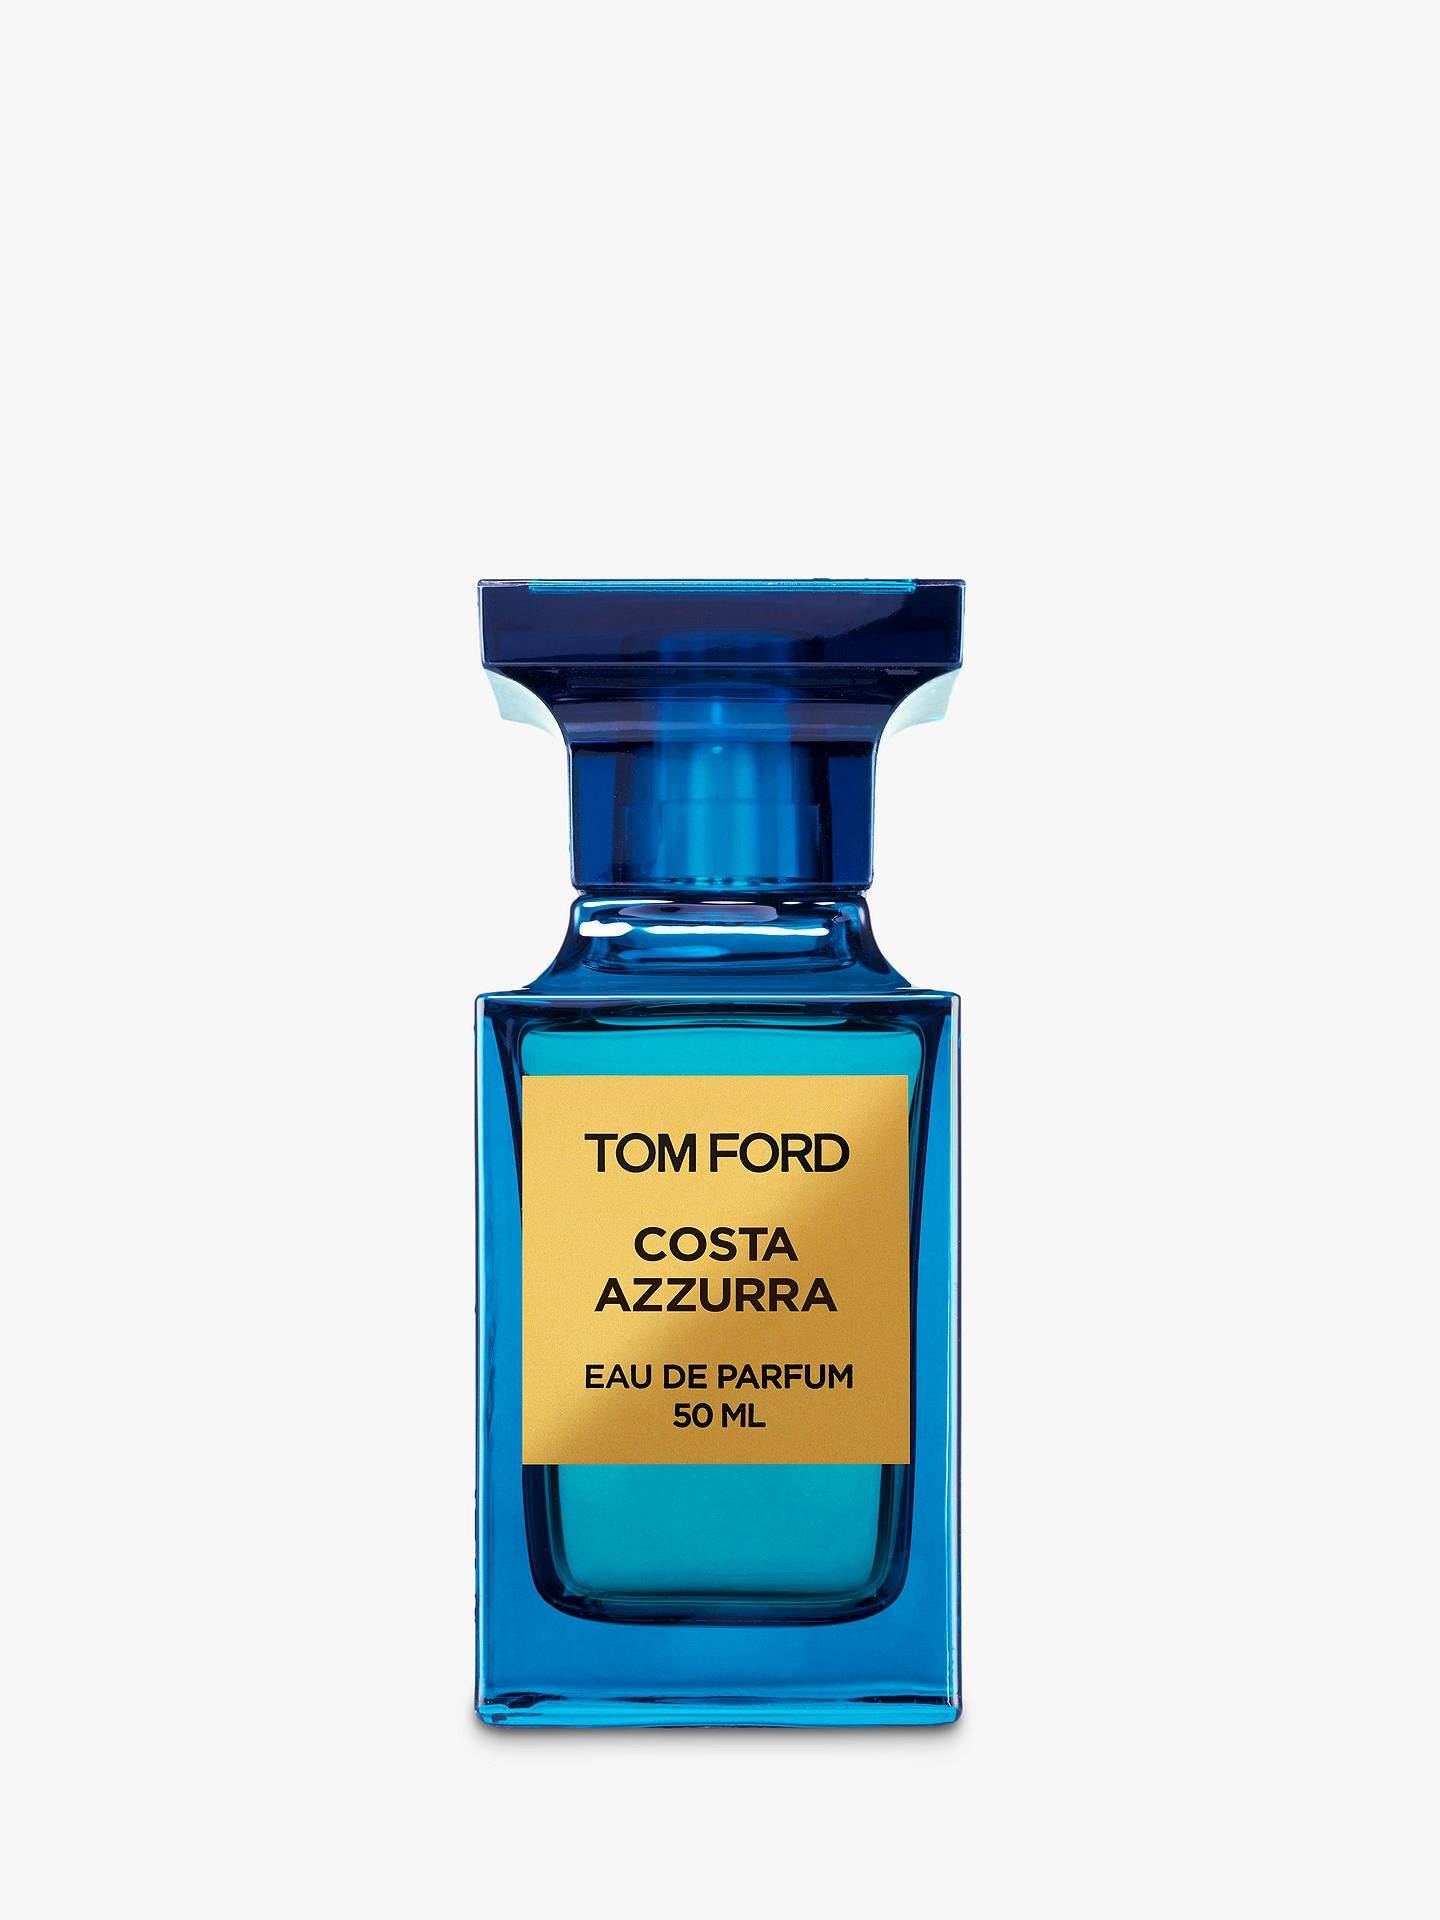 Tom Ford Costa Azzurra Eau de Parfum (50 ml), parfemska voda, 1.819 kn